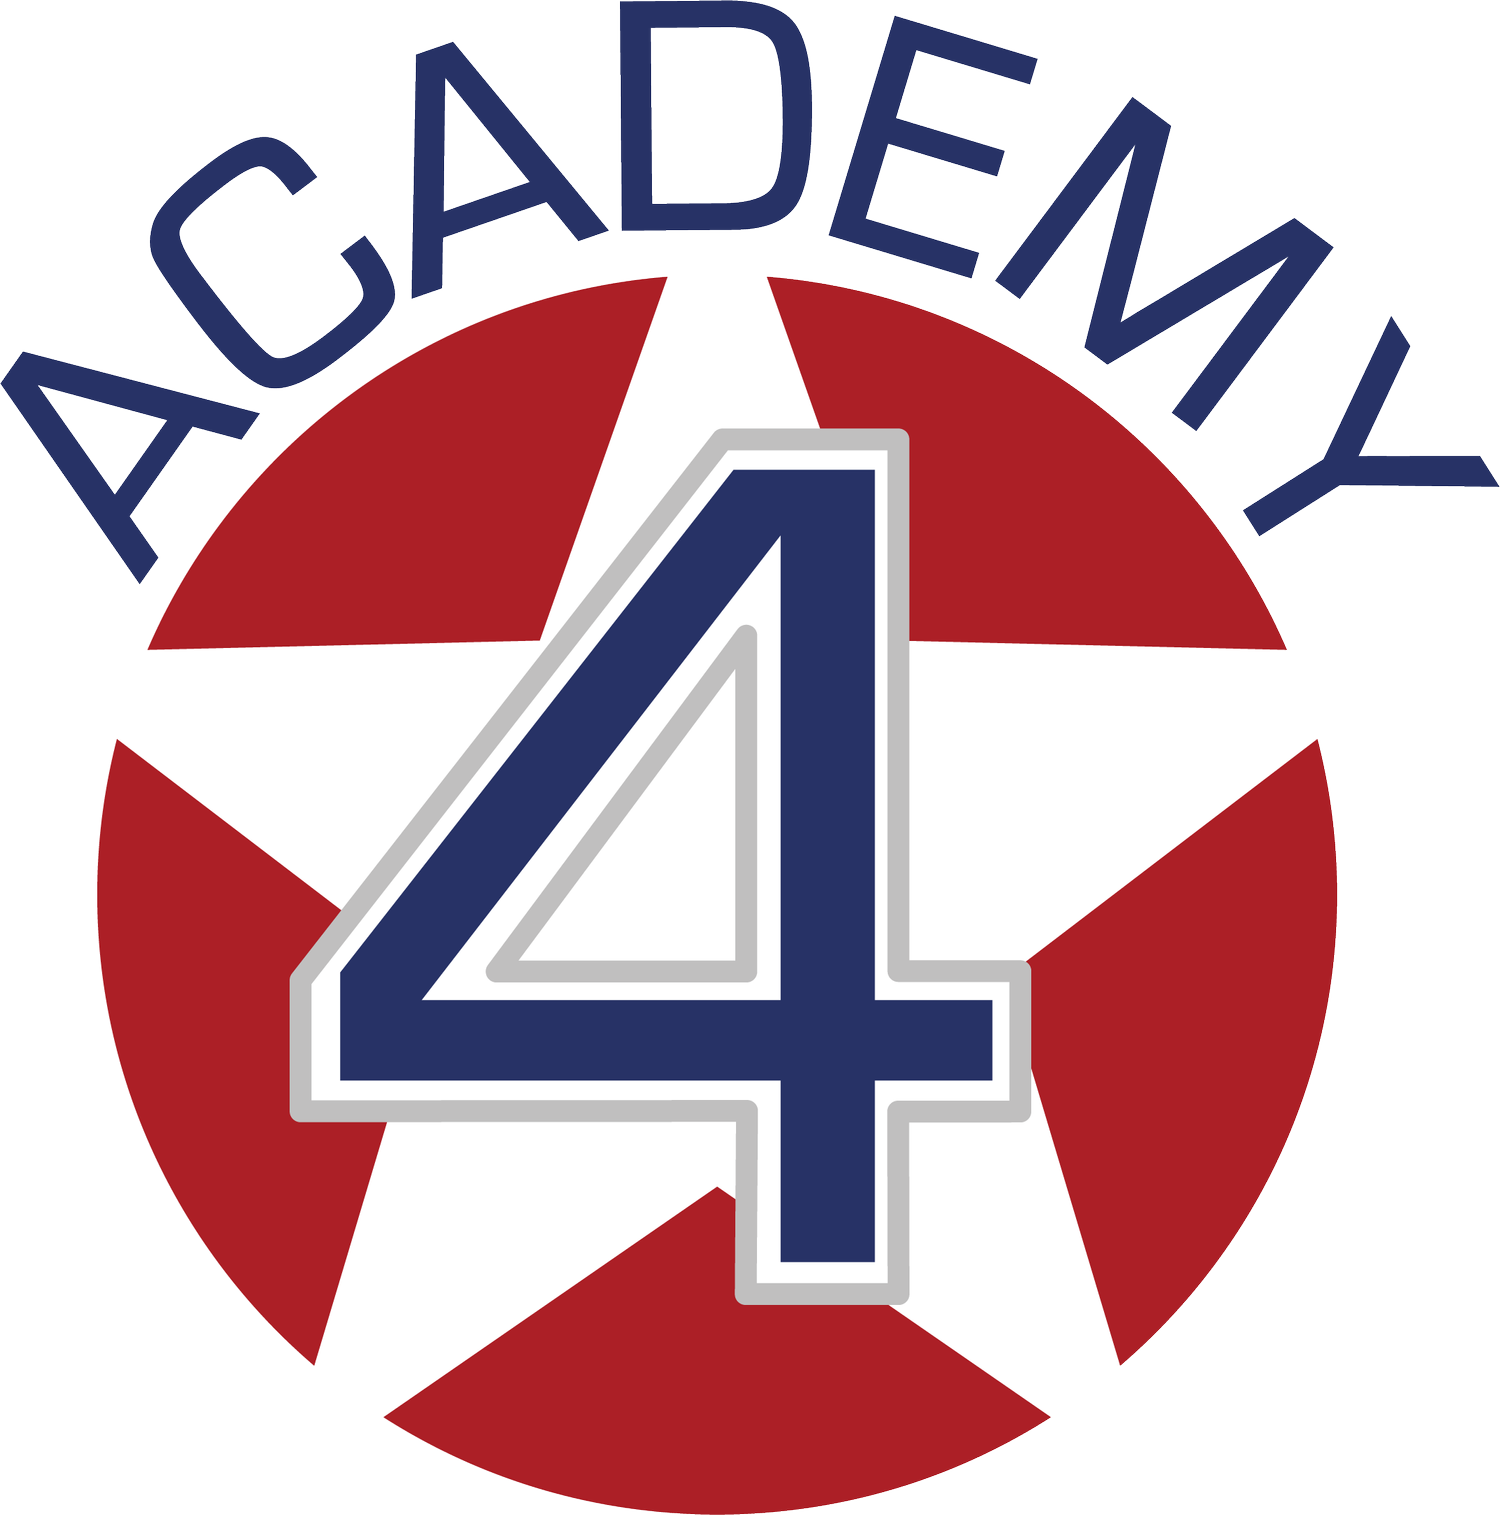 Academy 4